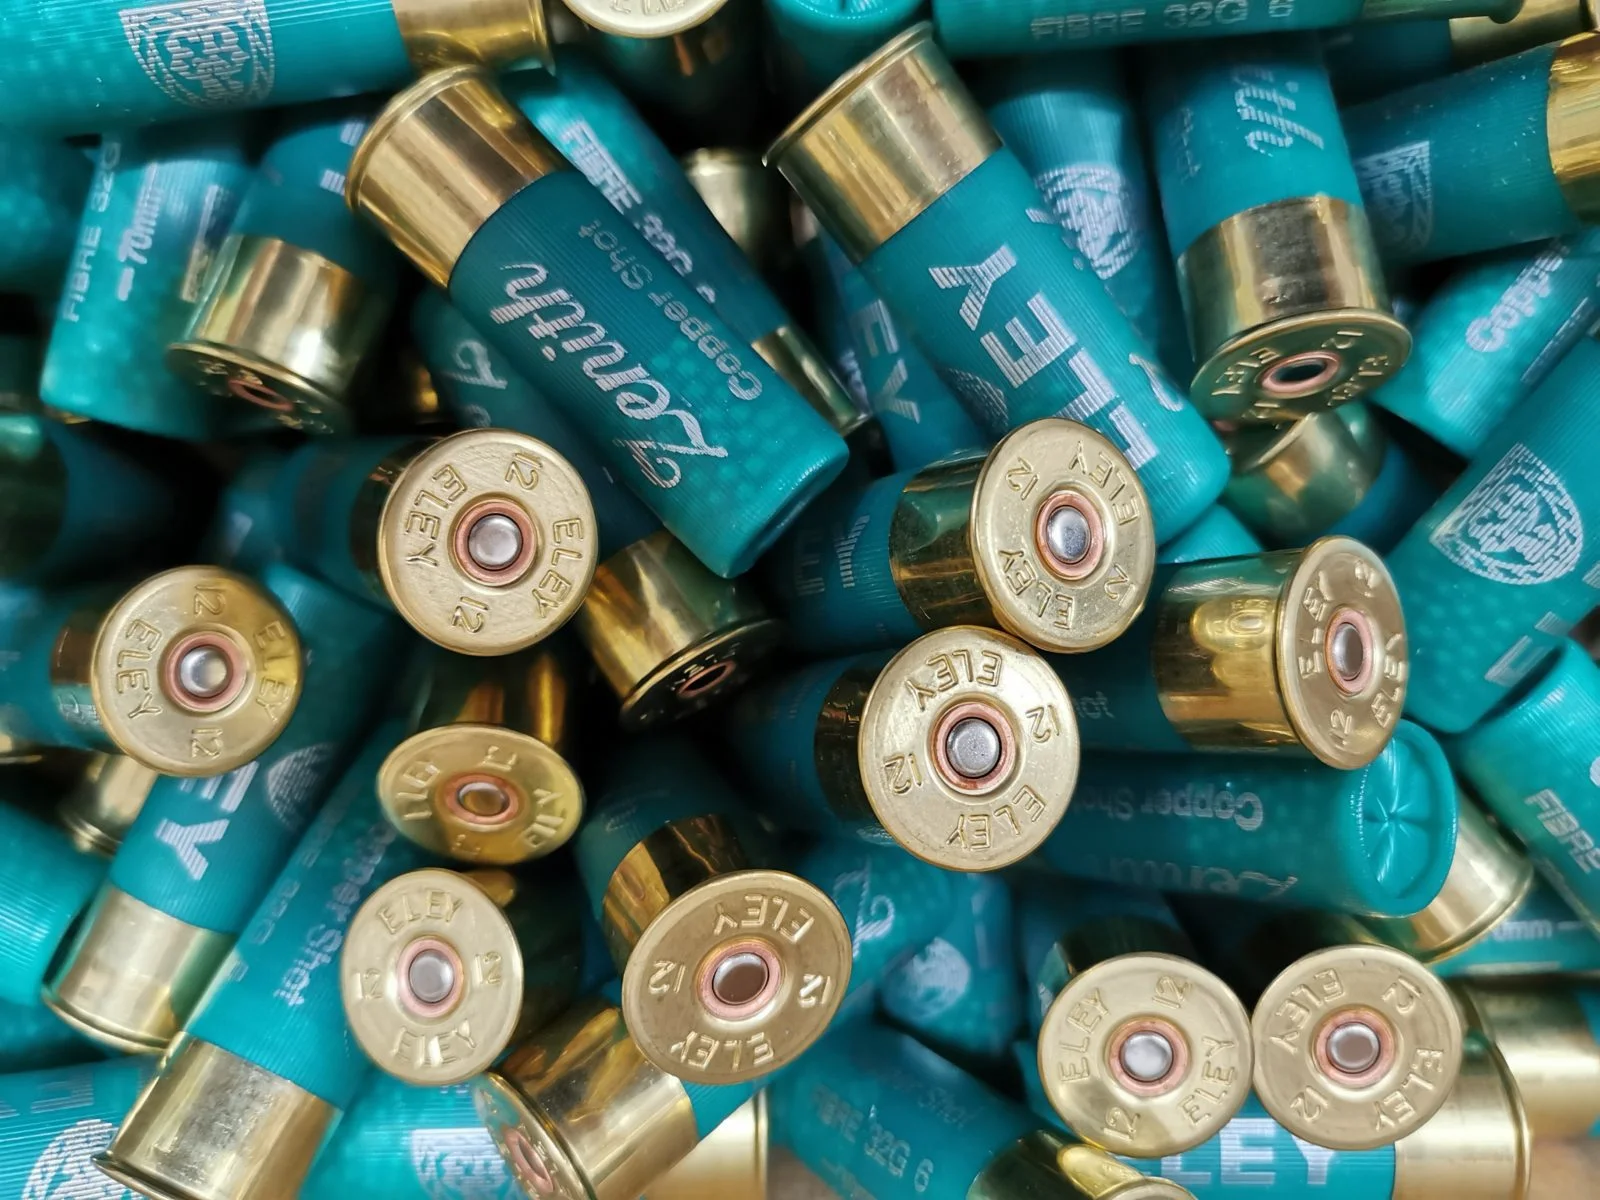 Pile of blue cartridges